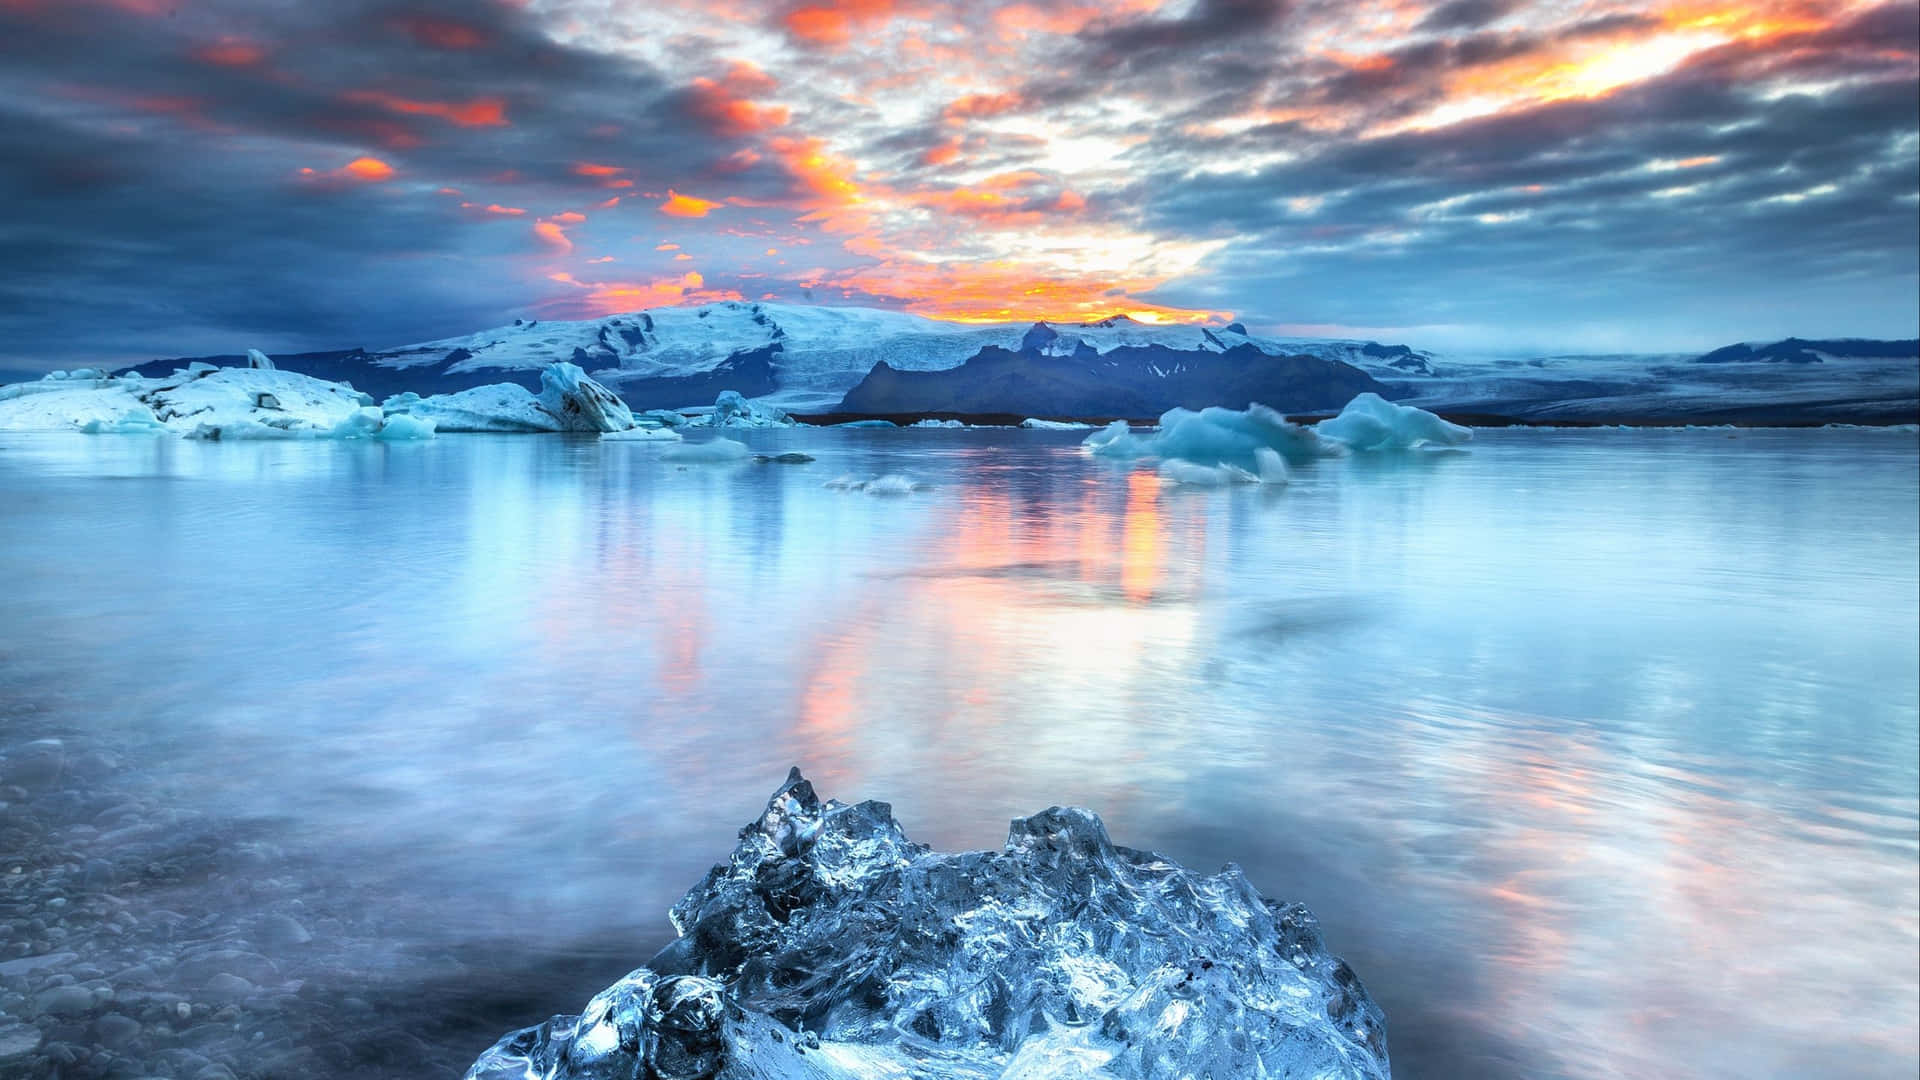 Caption: Tranquil Frozen Lake in Winter Wallpaper